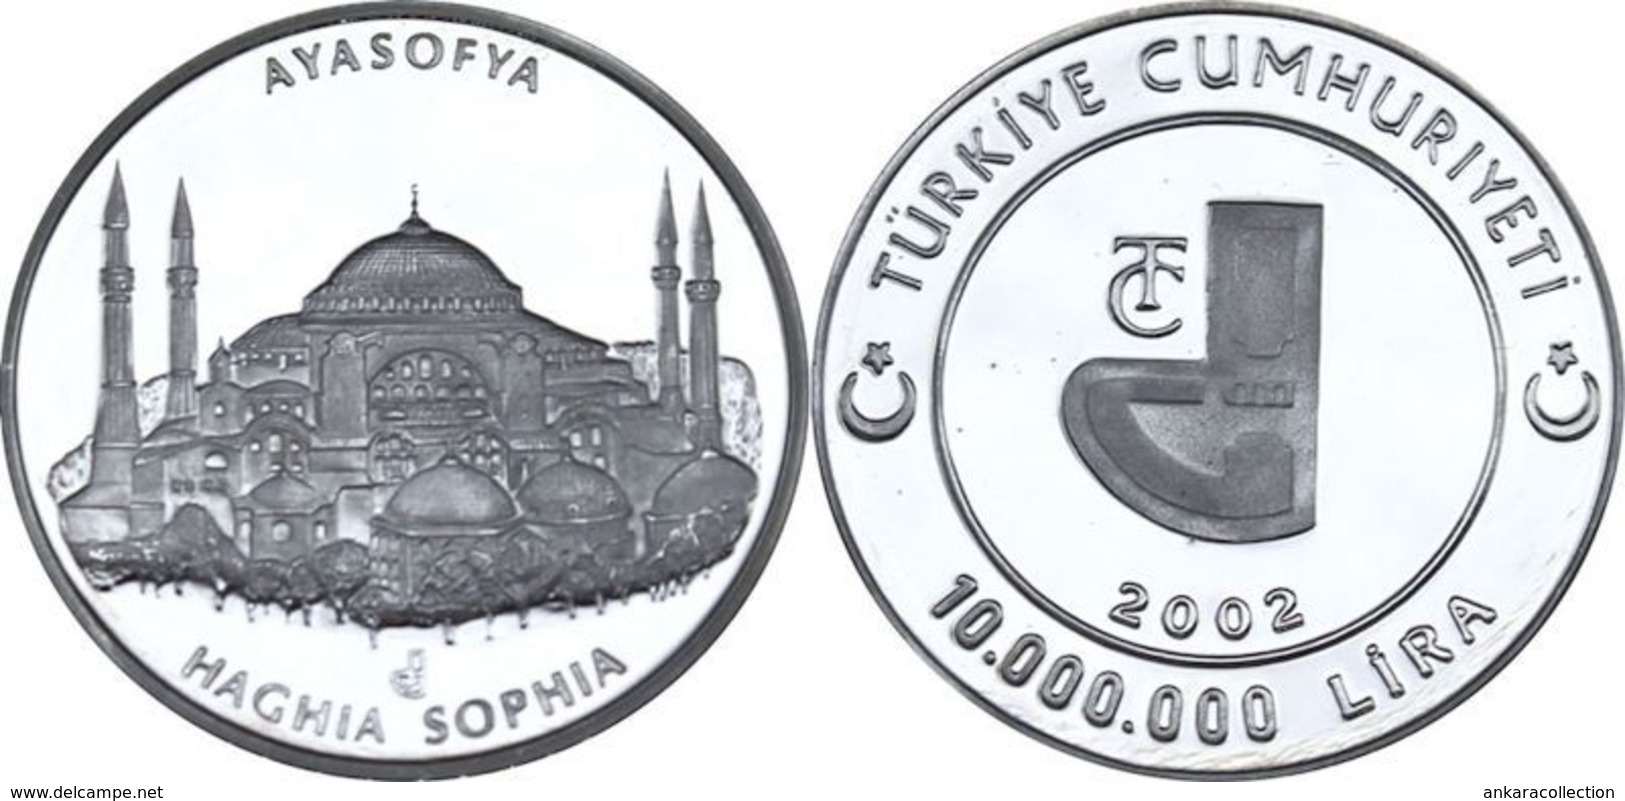 AC - HAGIA SOPHIA - AYA SOFYA MOSQUE COMMEMORATIVE SILVER COIN TURKEY 2002 PROOF UNCIRCULATED - Turquie